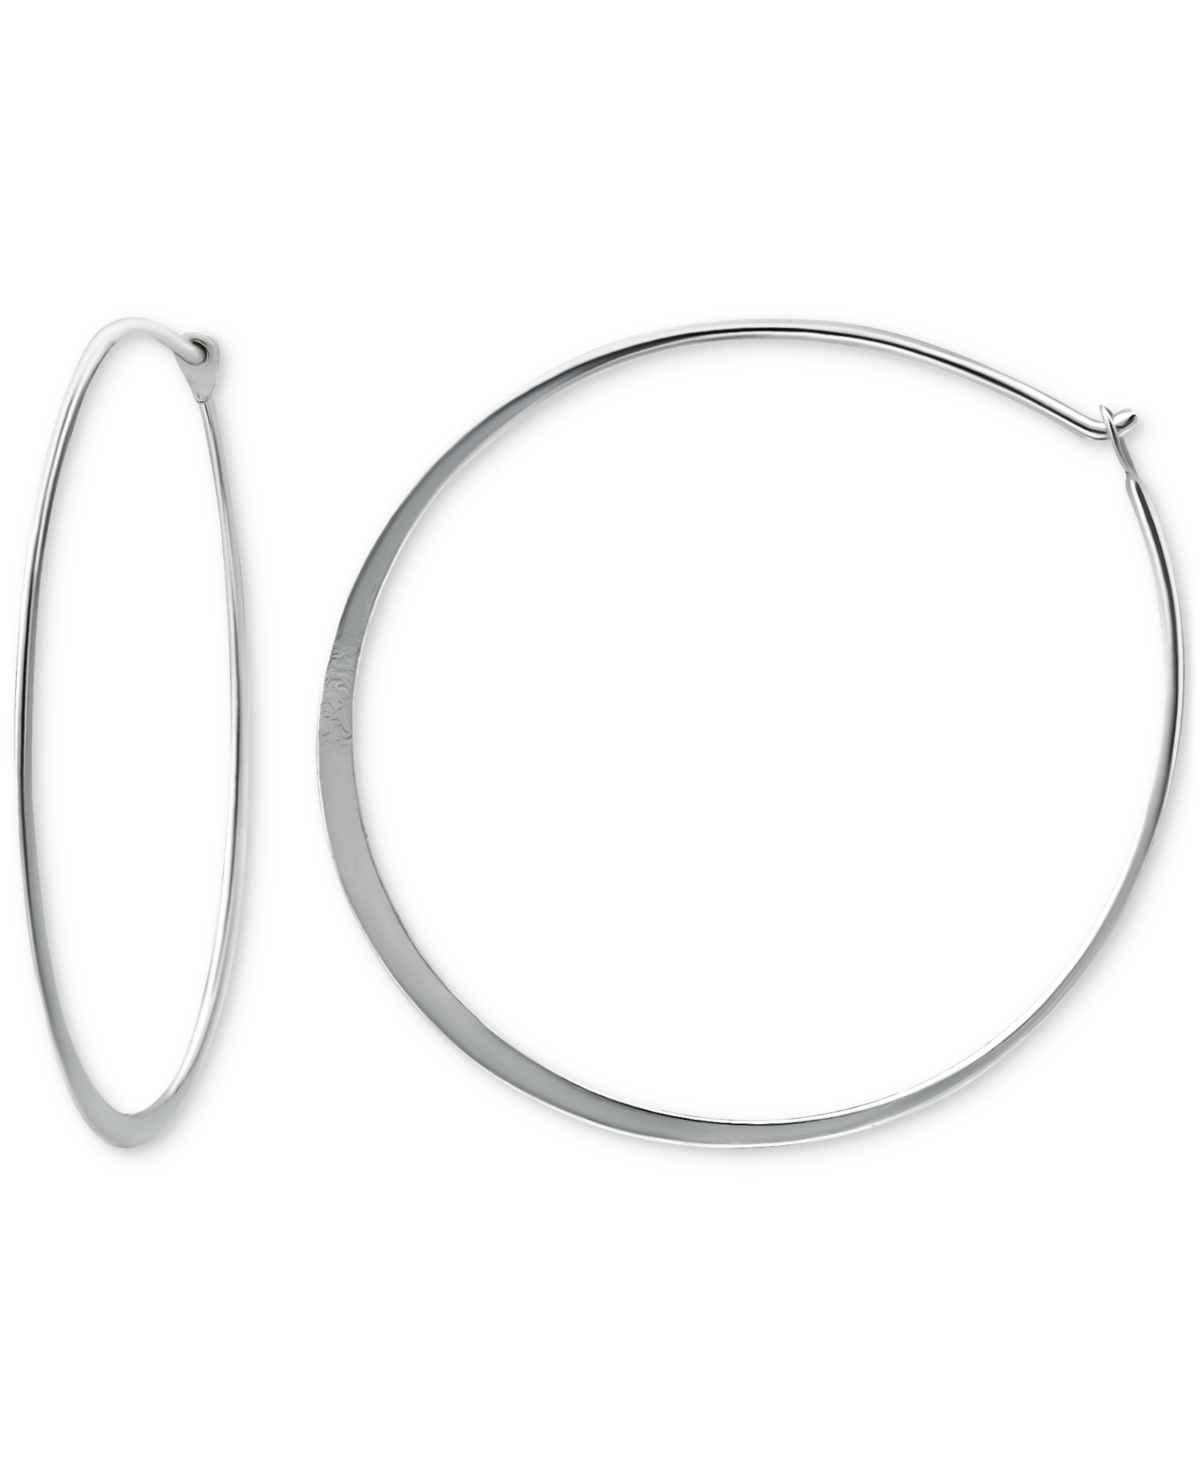 Giani Bernini Polished Endless Medium Hoop Earrings In Sterling Silver, 30mm, Created For Macy's